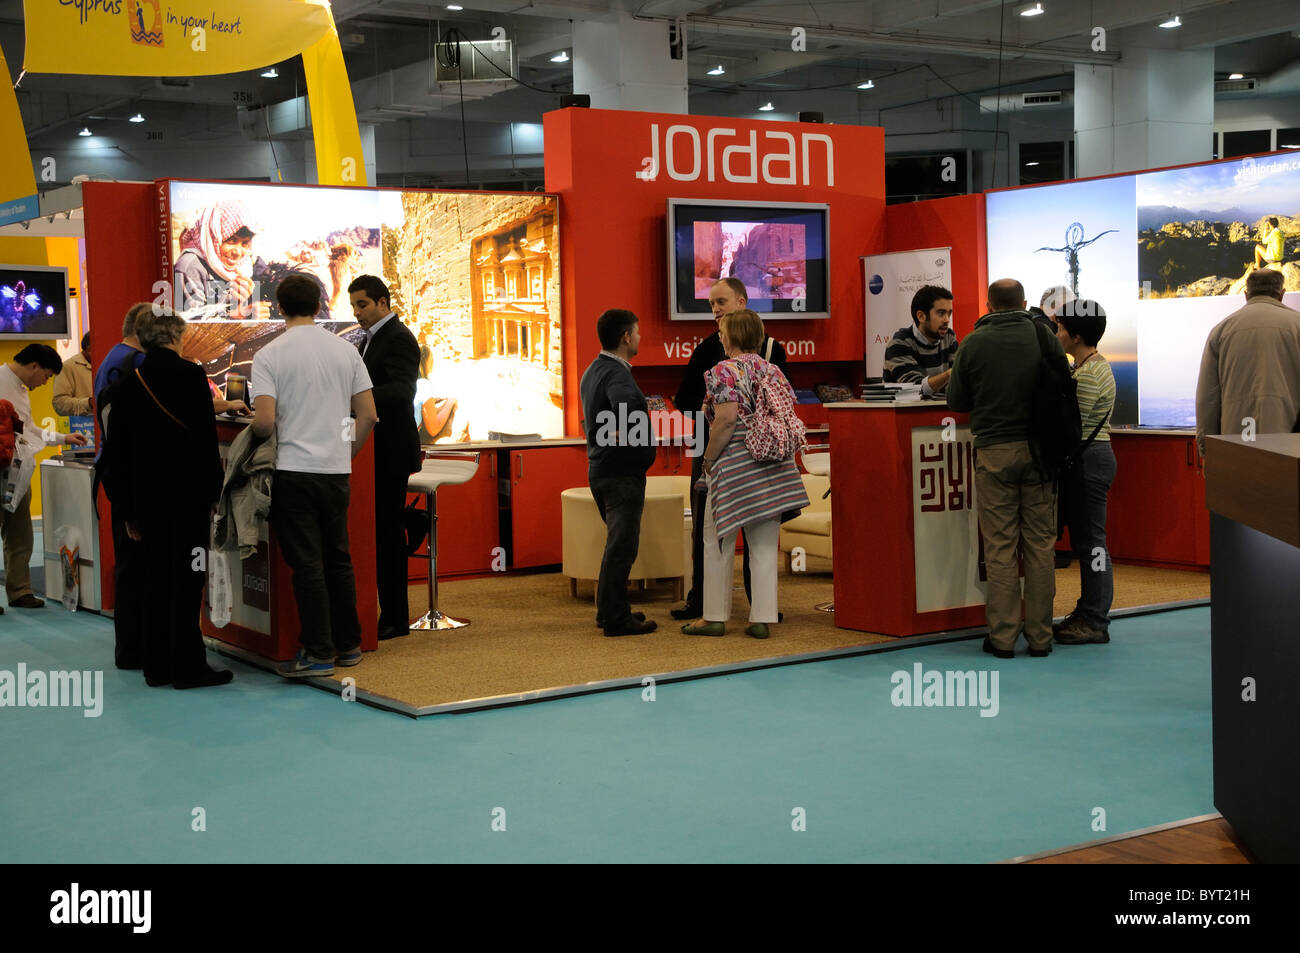 Jordan Tourism Organisation exhibiting their holidays at Destinations travel fair at Earls Court London. Stock Photo